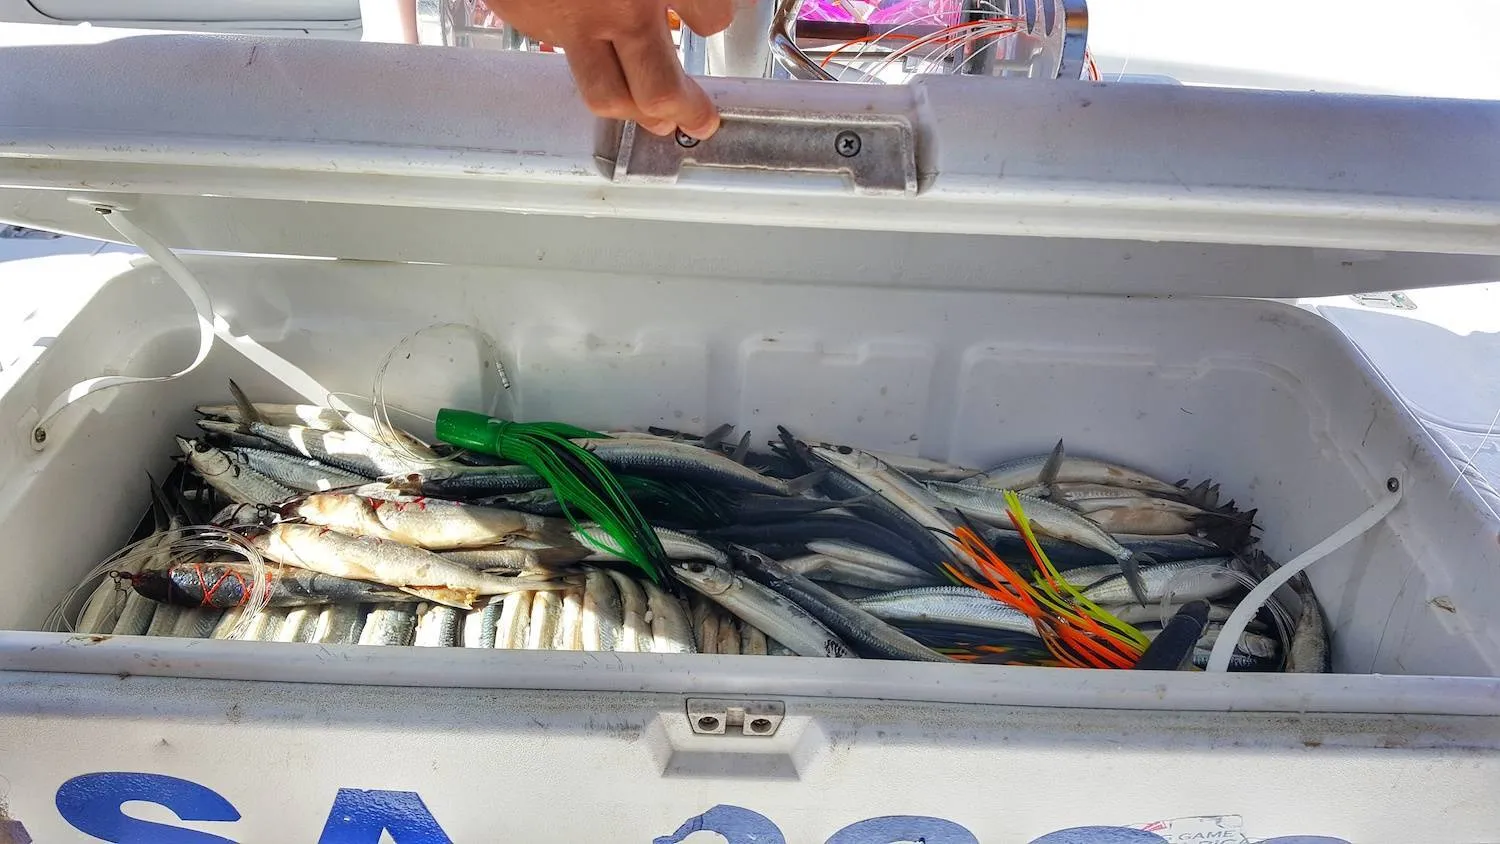 Cooler full of Ballyhoo Fish - rigged for billfish